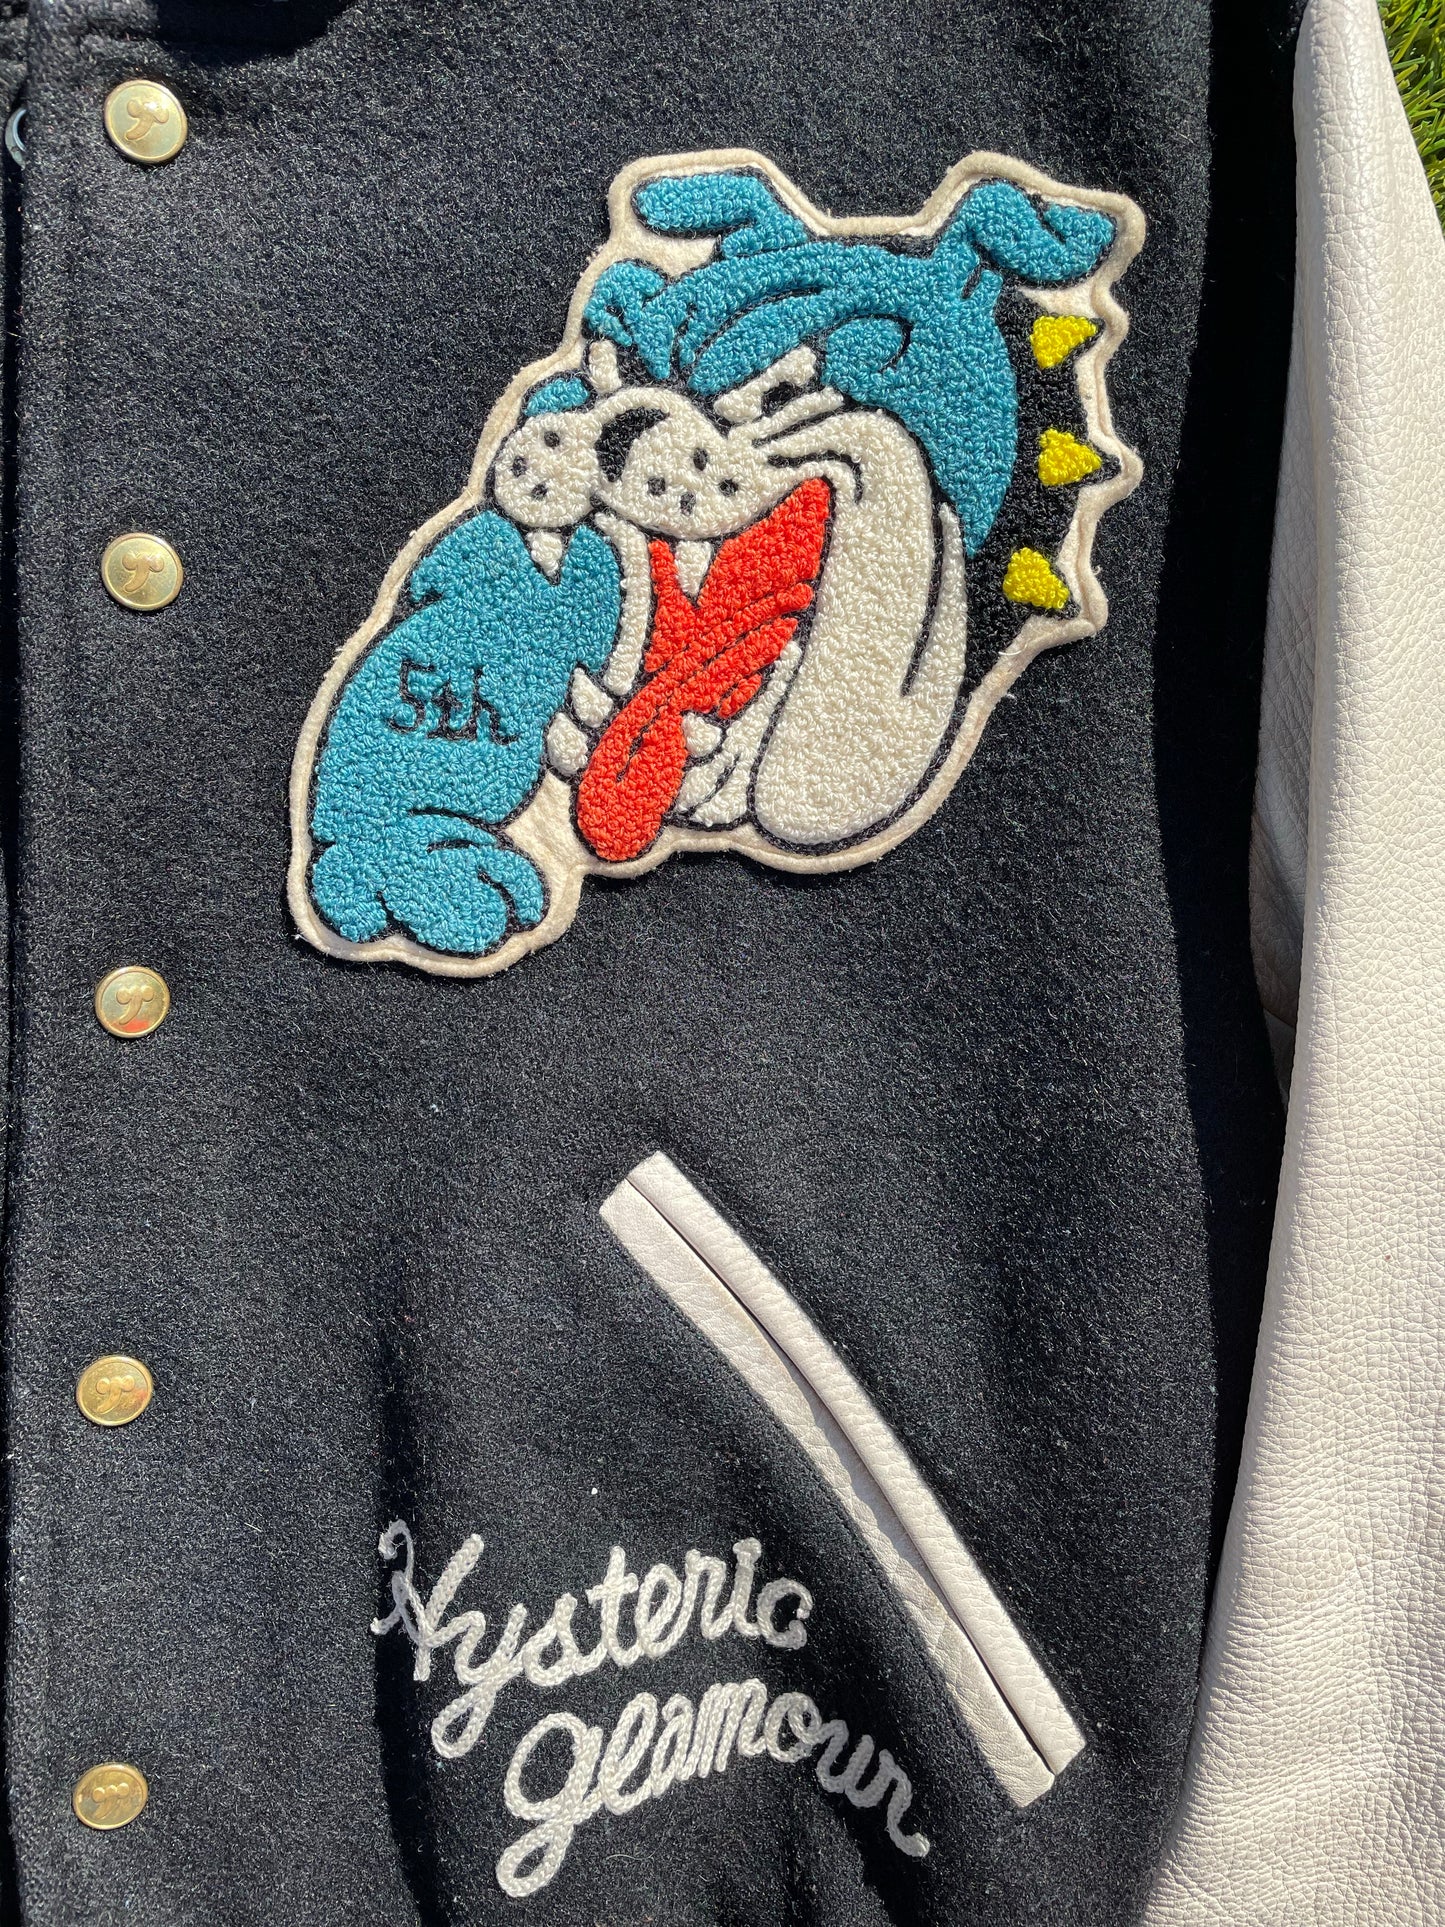 1989 Hysteric Glamour 5th Anniversary Bulldog Varsity Jacket